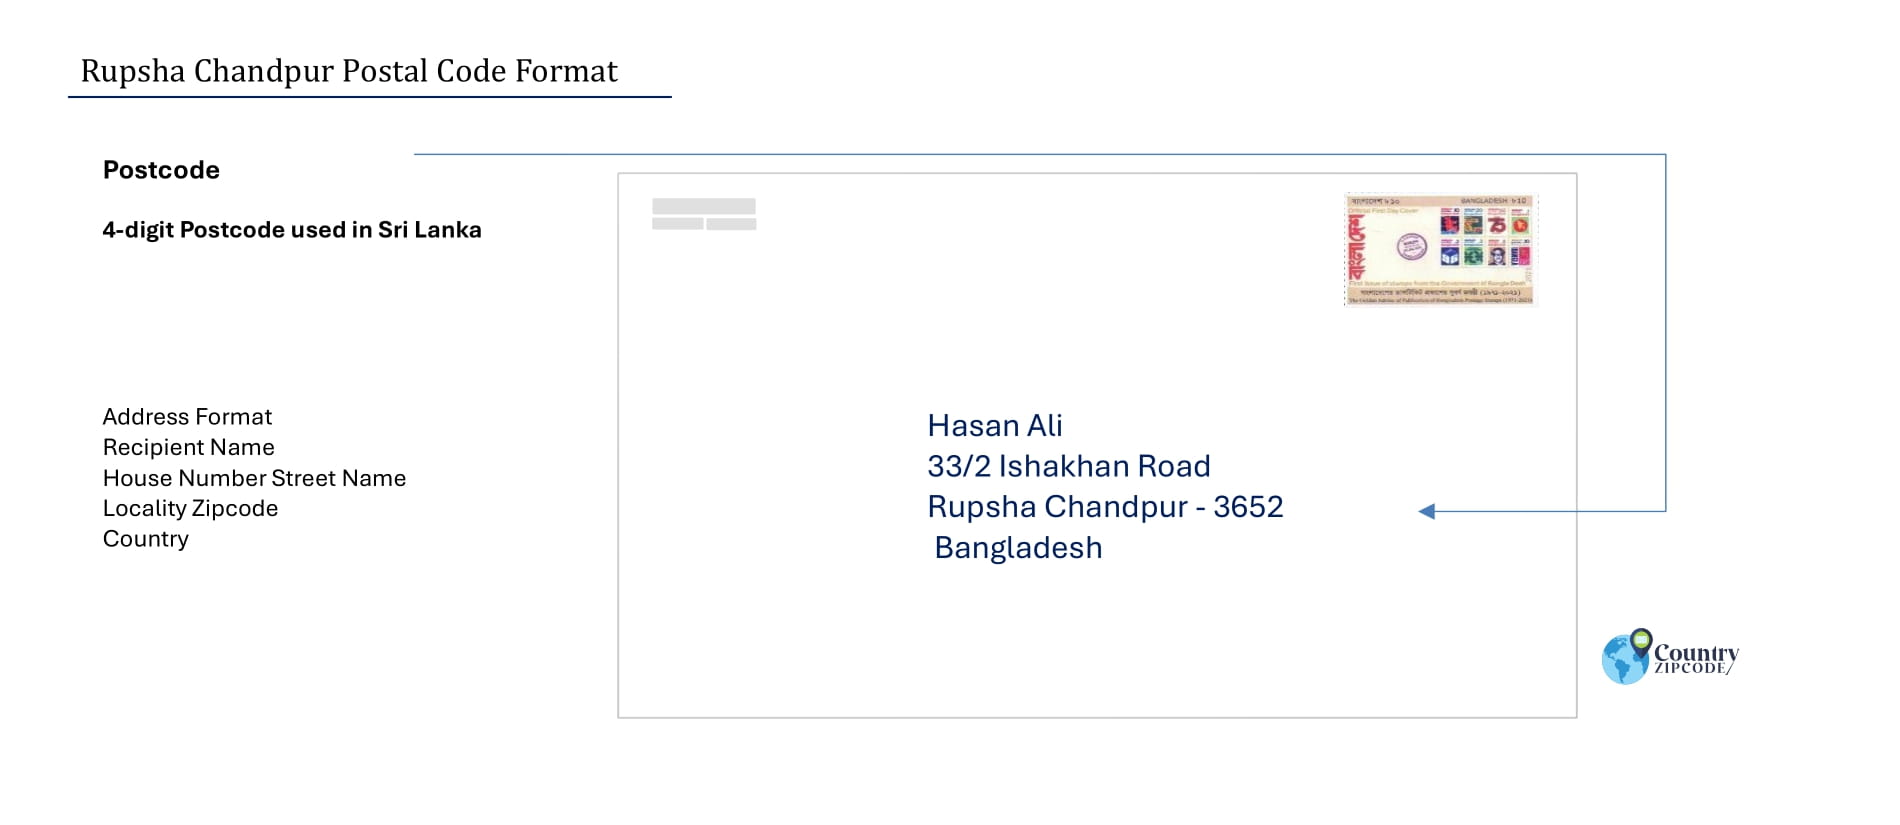 Rupsha Chandpur Postal code format